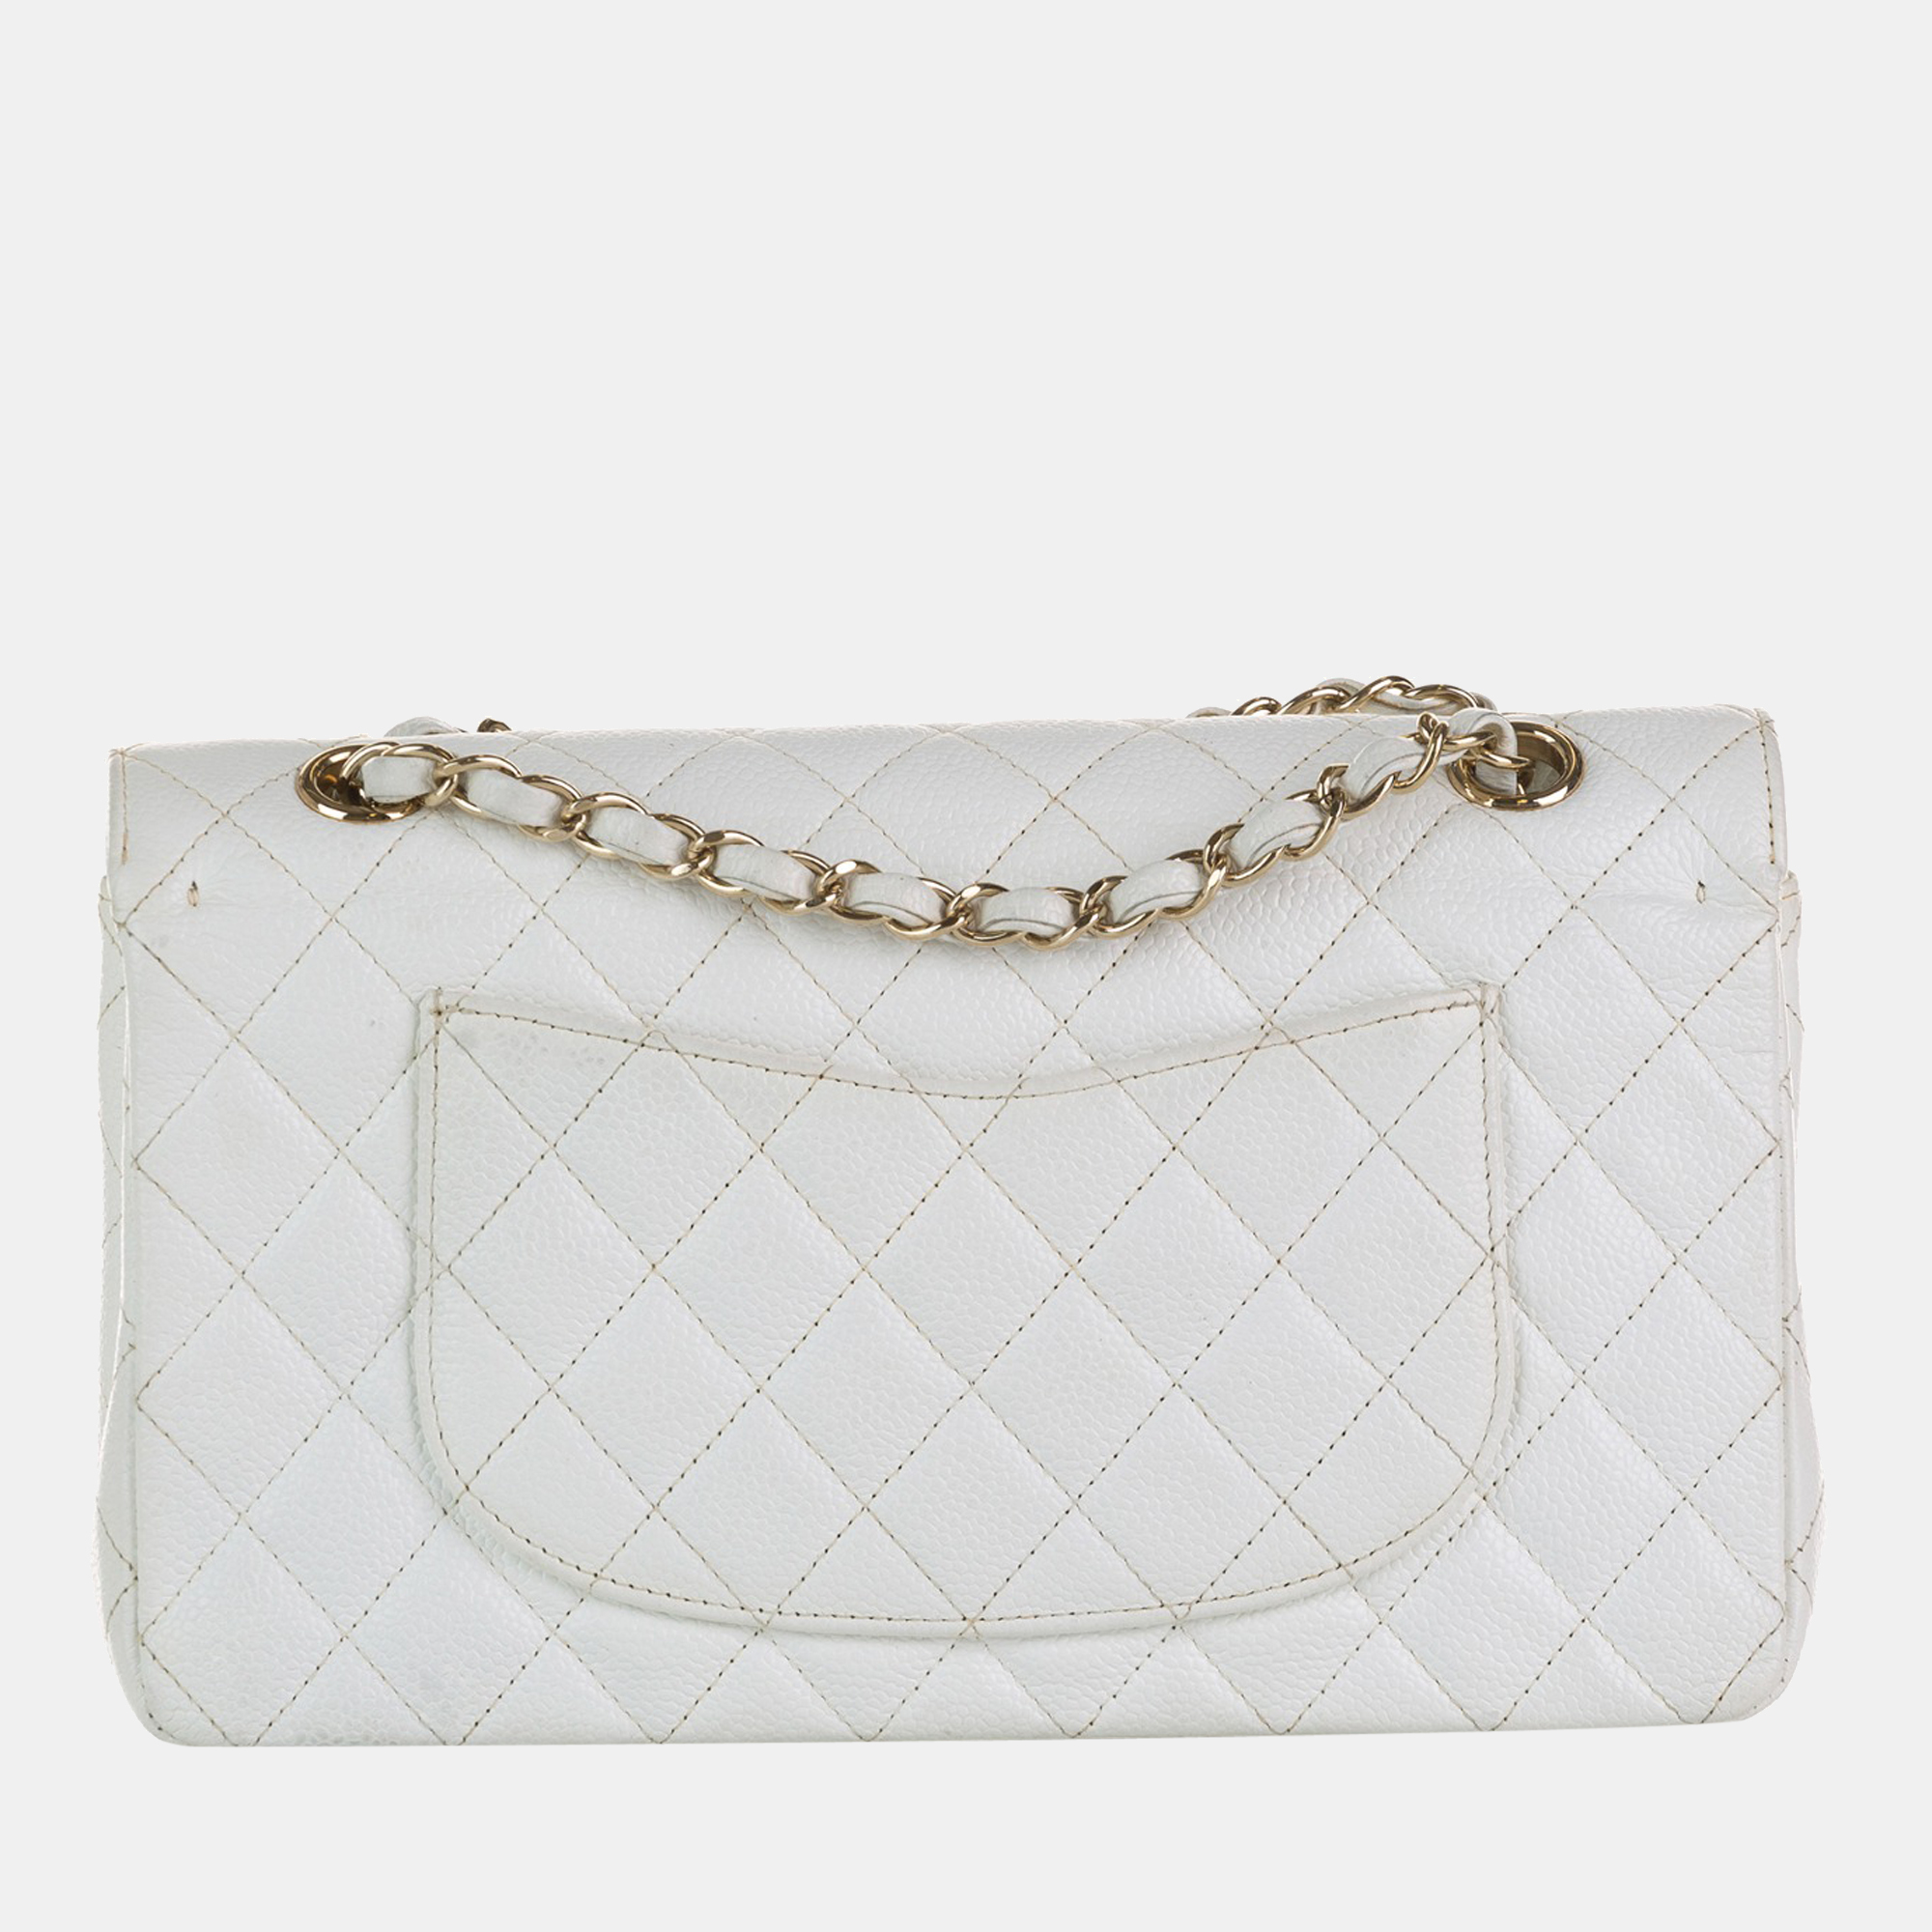 Chanel White Medium Classic Caviar Leather Double Flap Bag